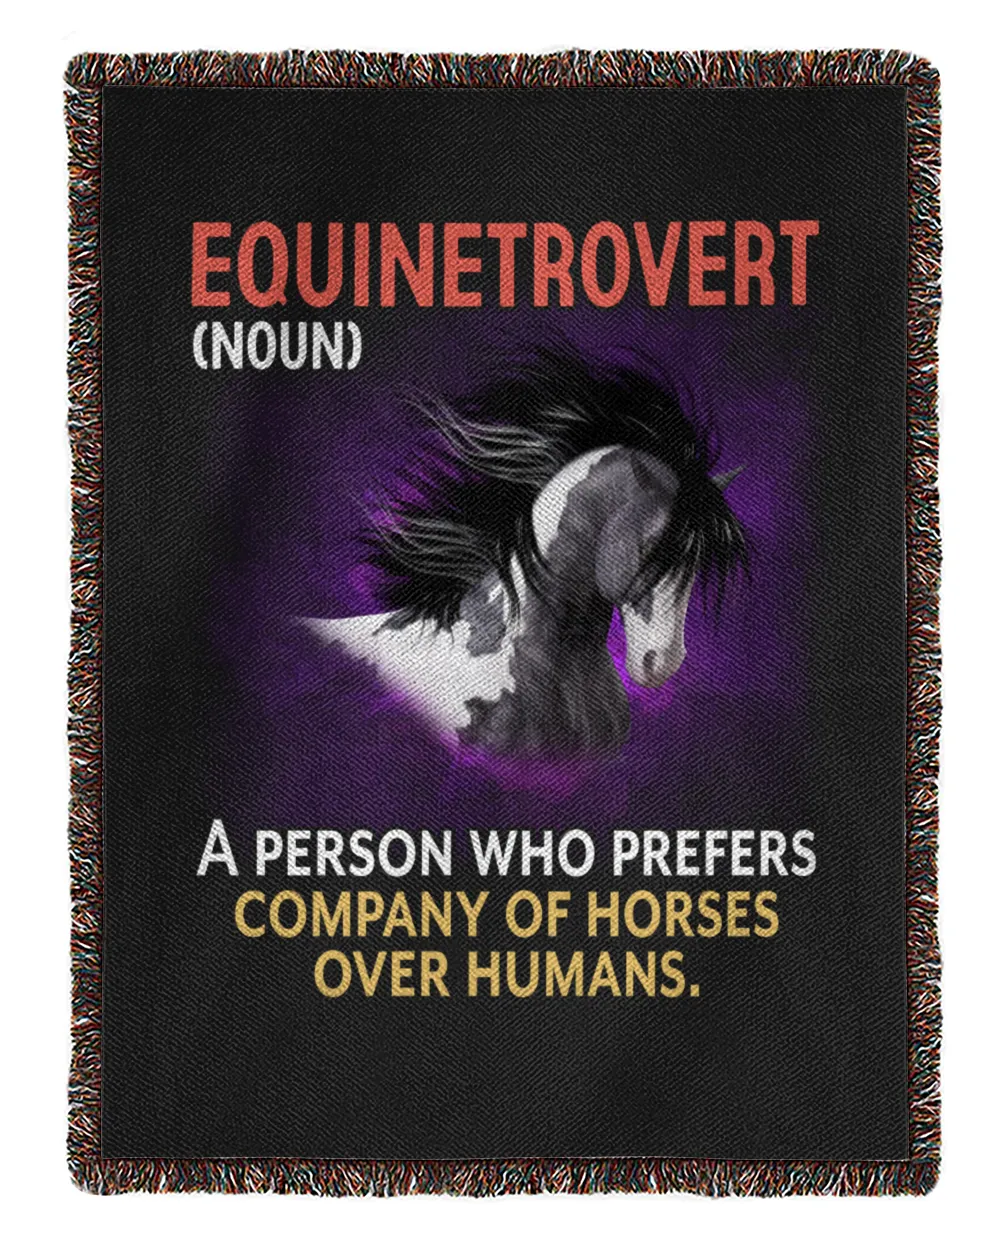 Horse Riding Company of horses over human